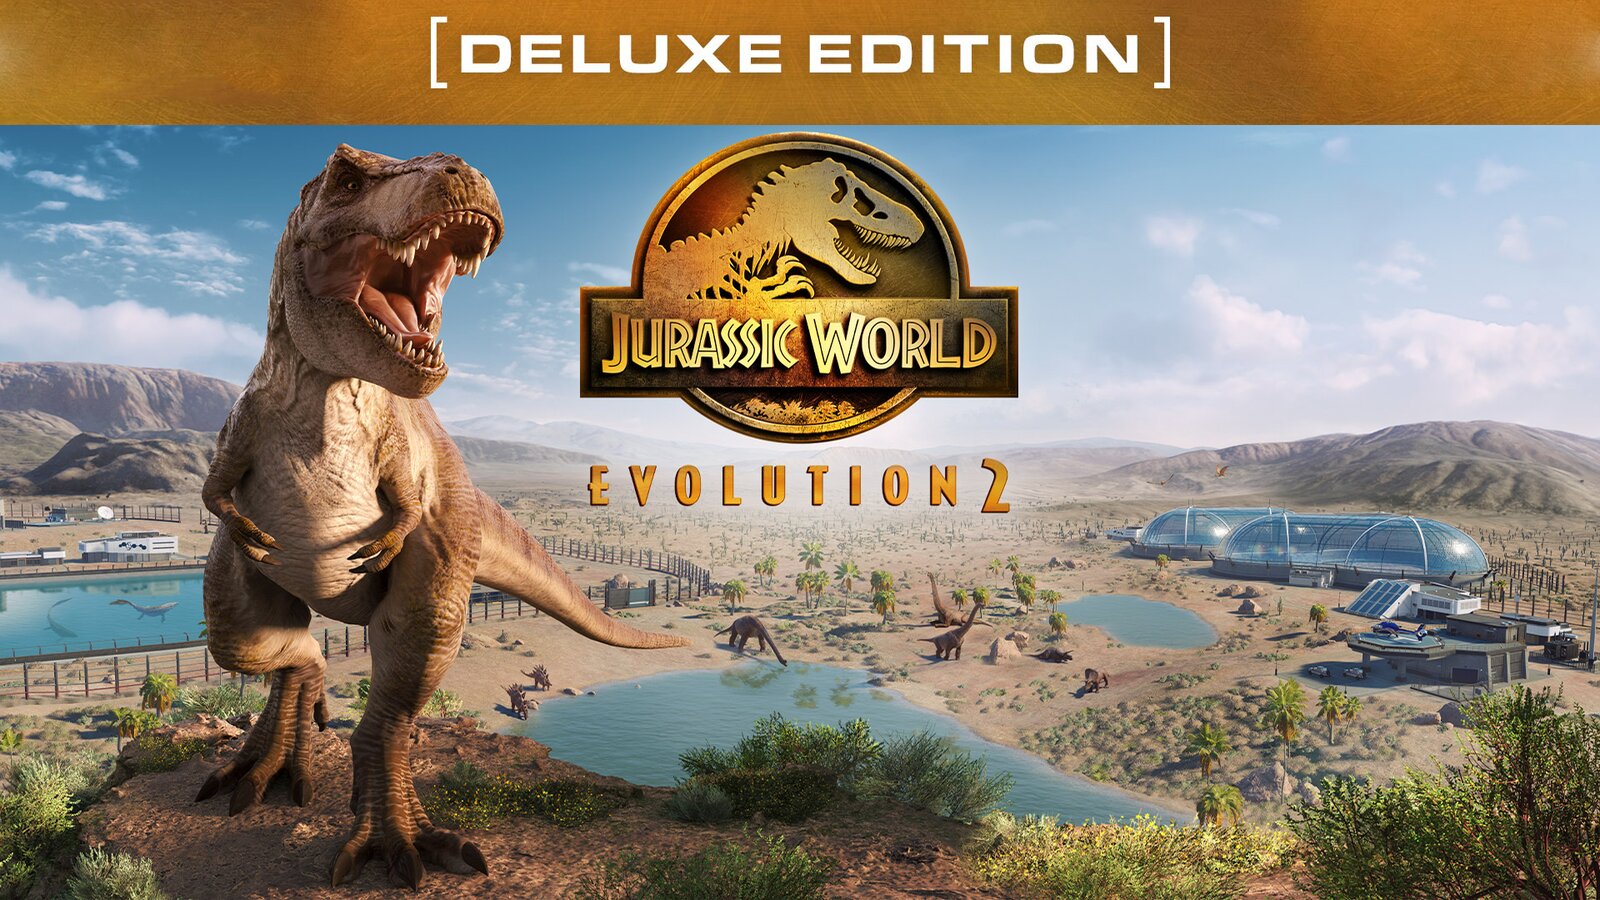 Jurassic World Evolution 2 - Deluxe Edition